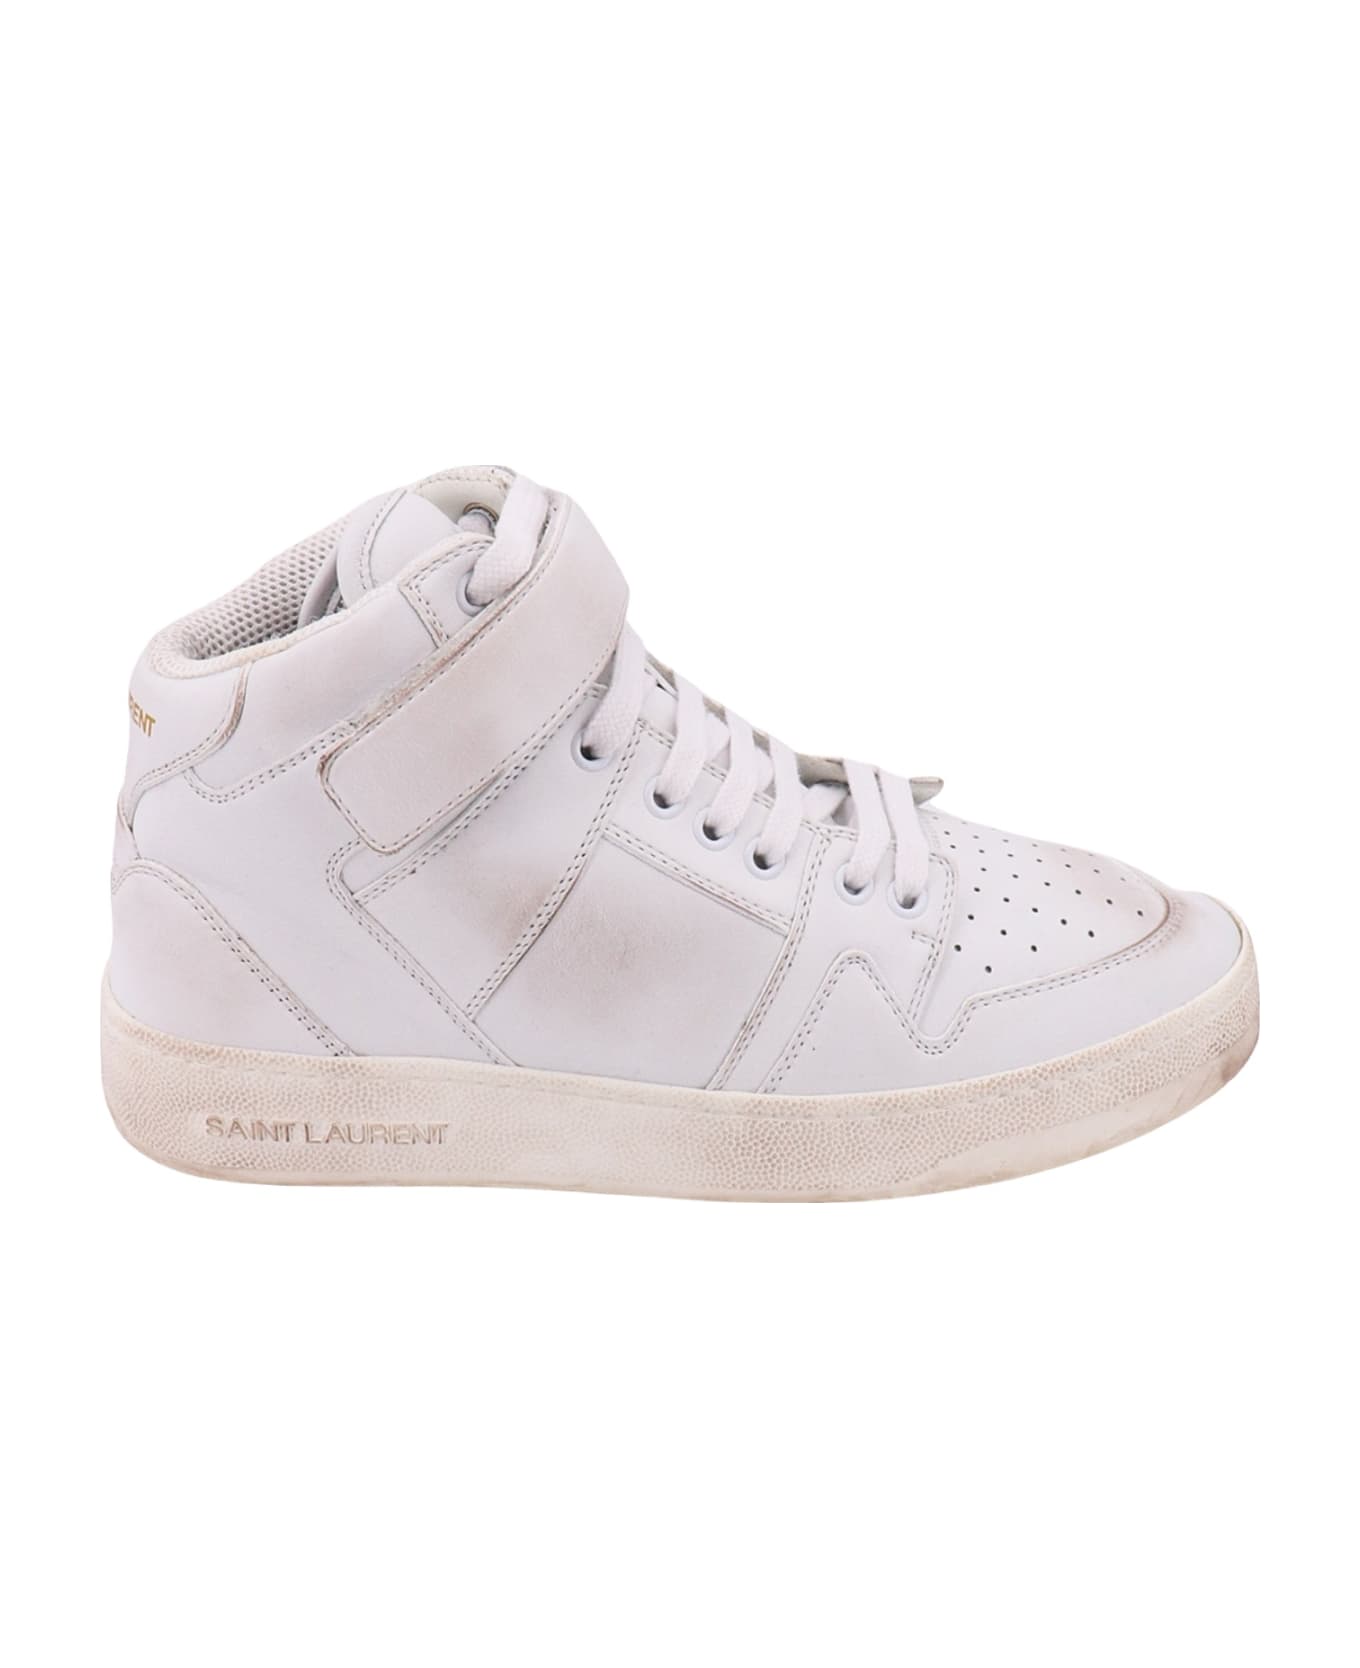 Saint Laurent Lax Sneakers - White